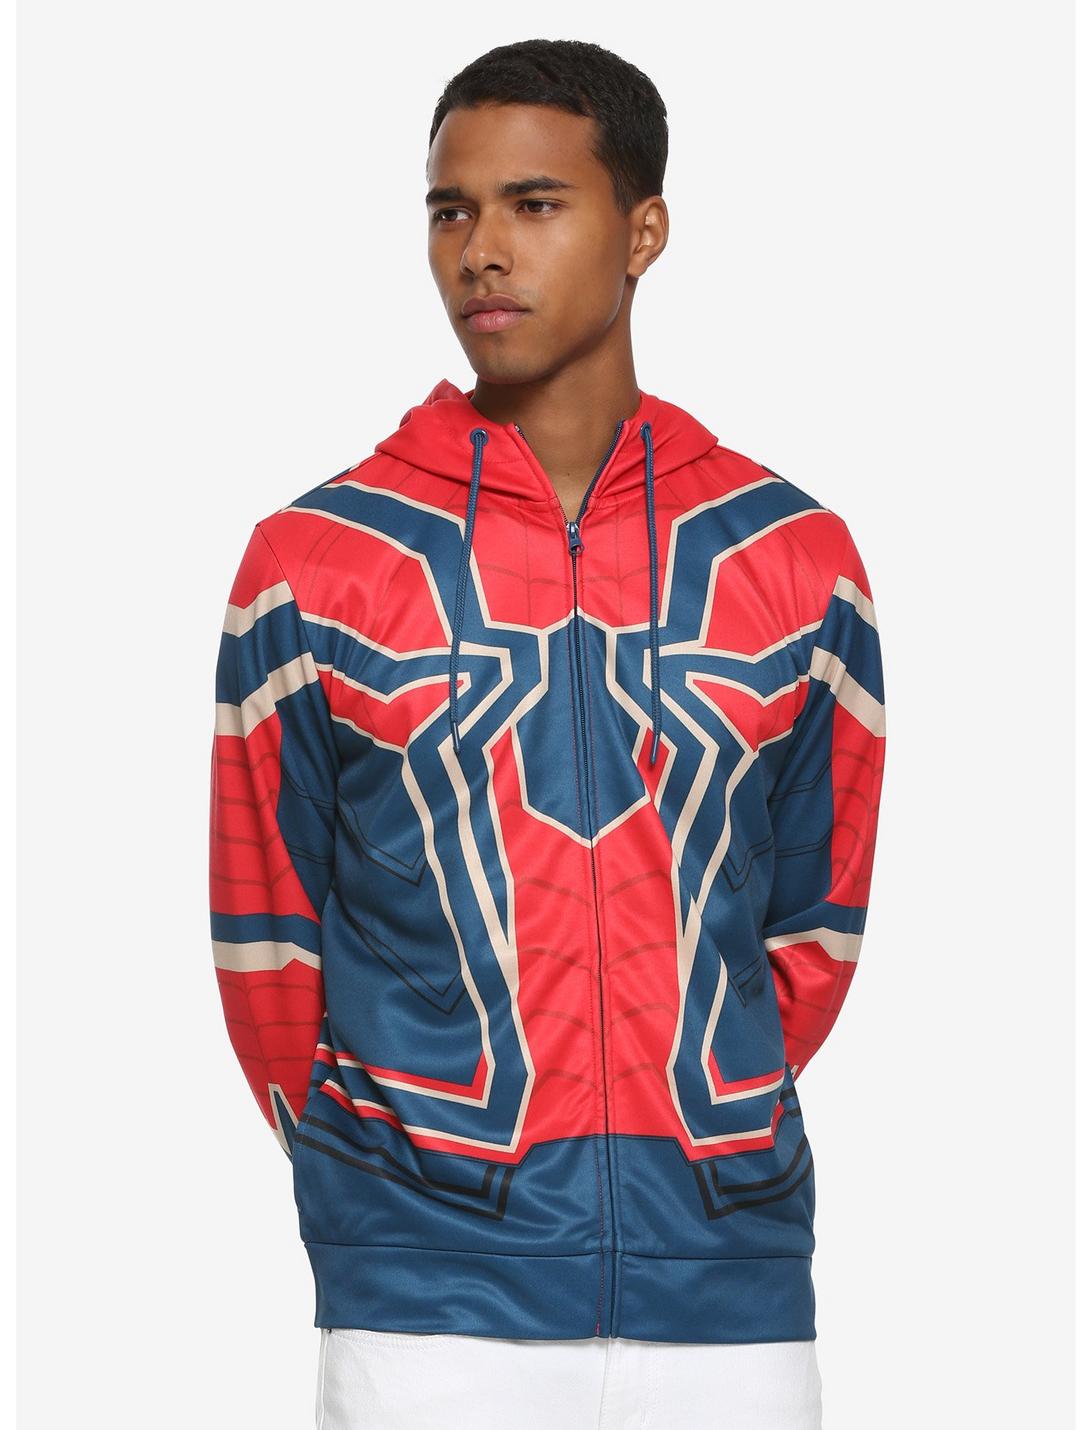 Spiderman Sweater Avengers Infinity War Hoodie Iron spider Coat Cosplay Costume